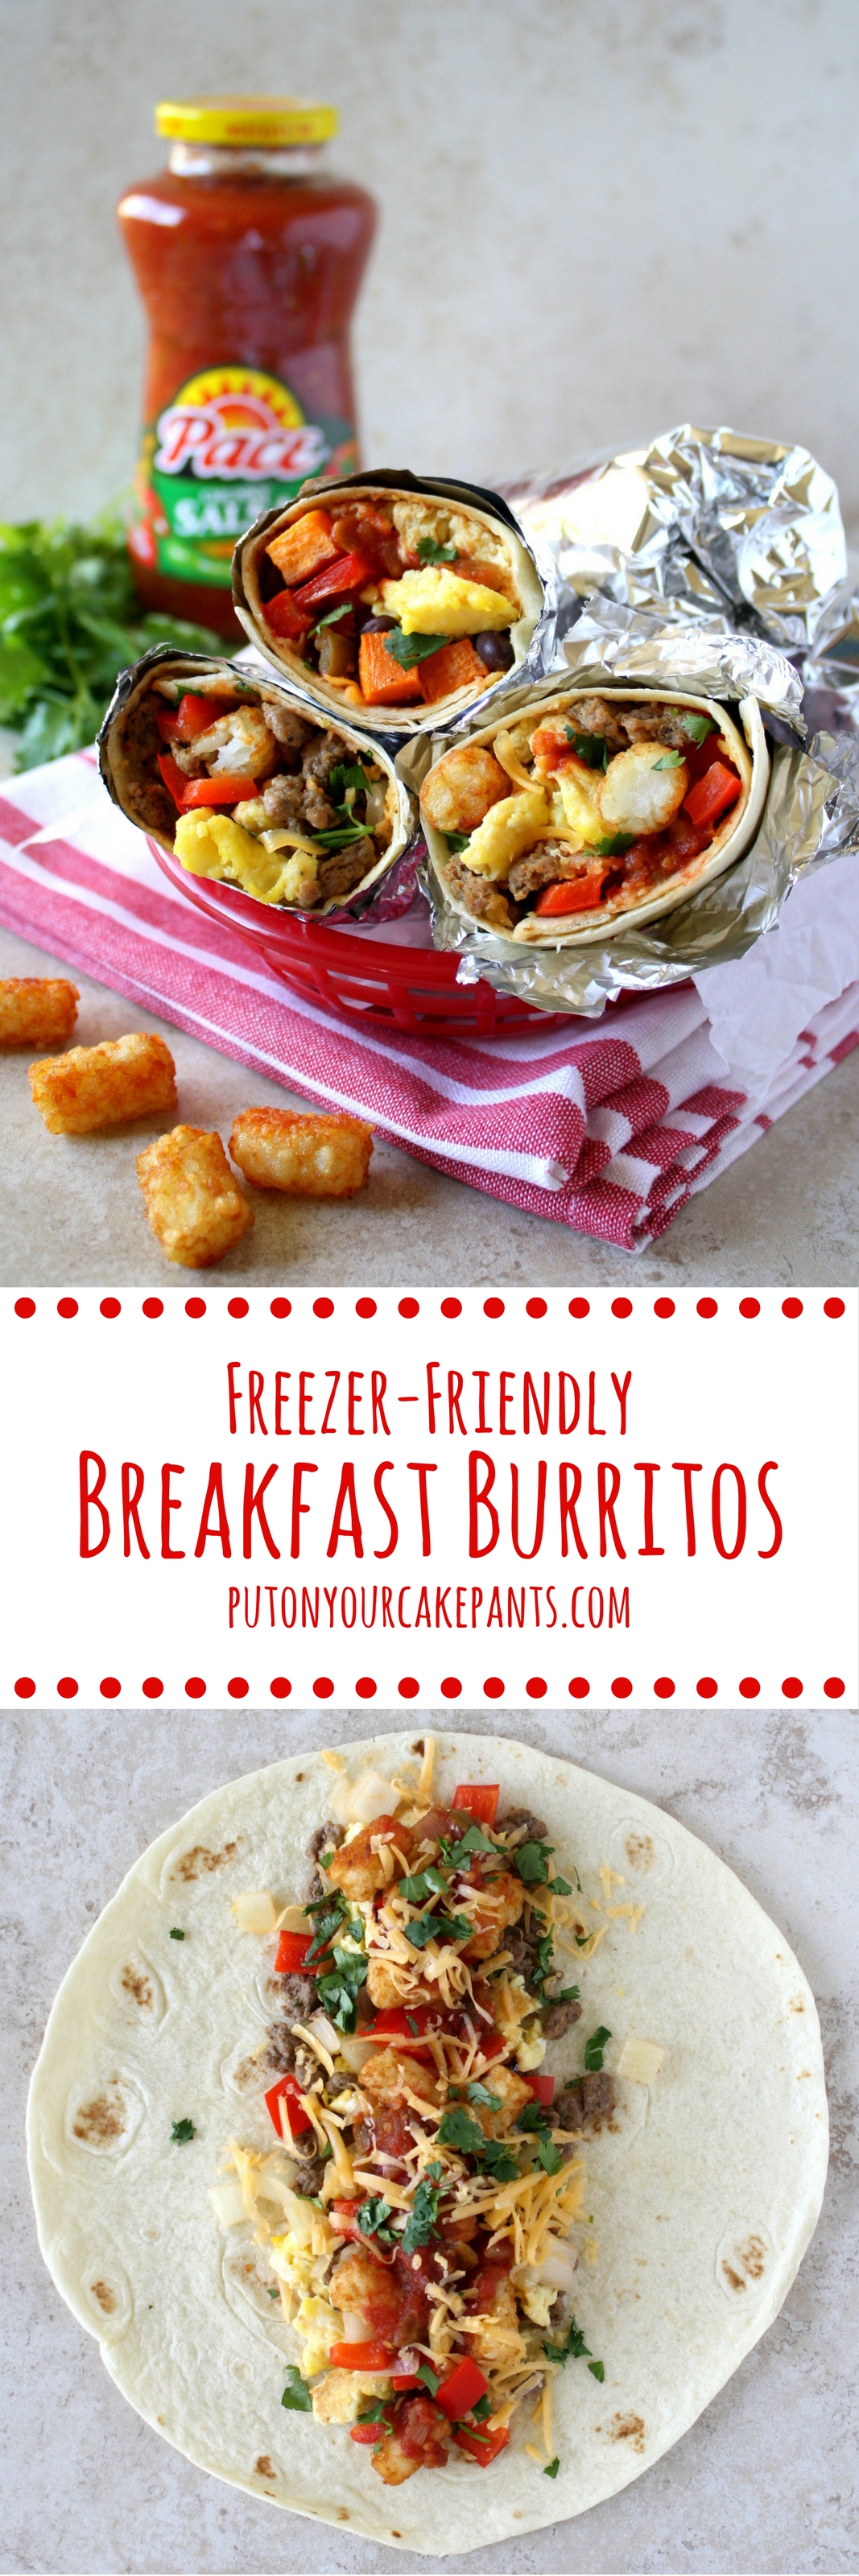 freezer friendly breakfast burritos #MakeGameTimeSaucy #shop